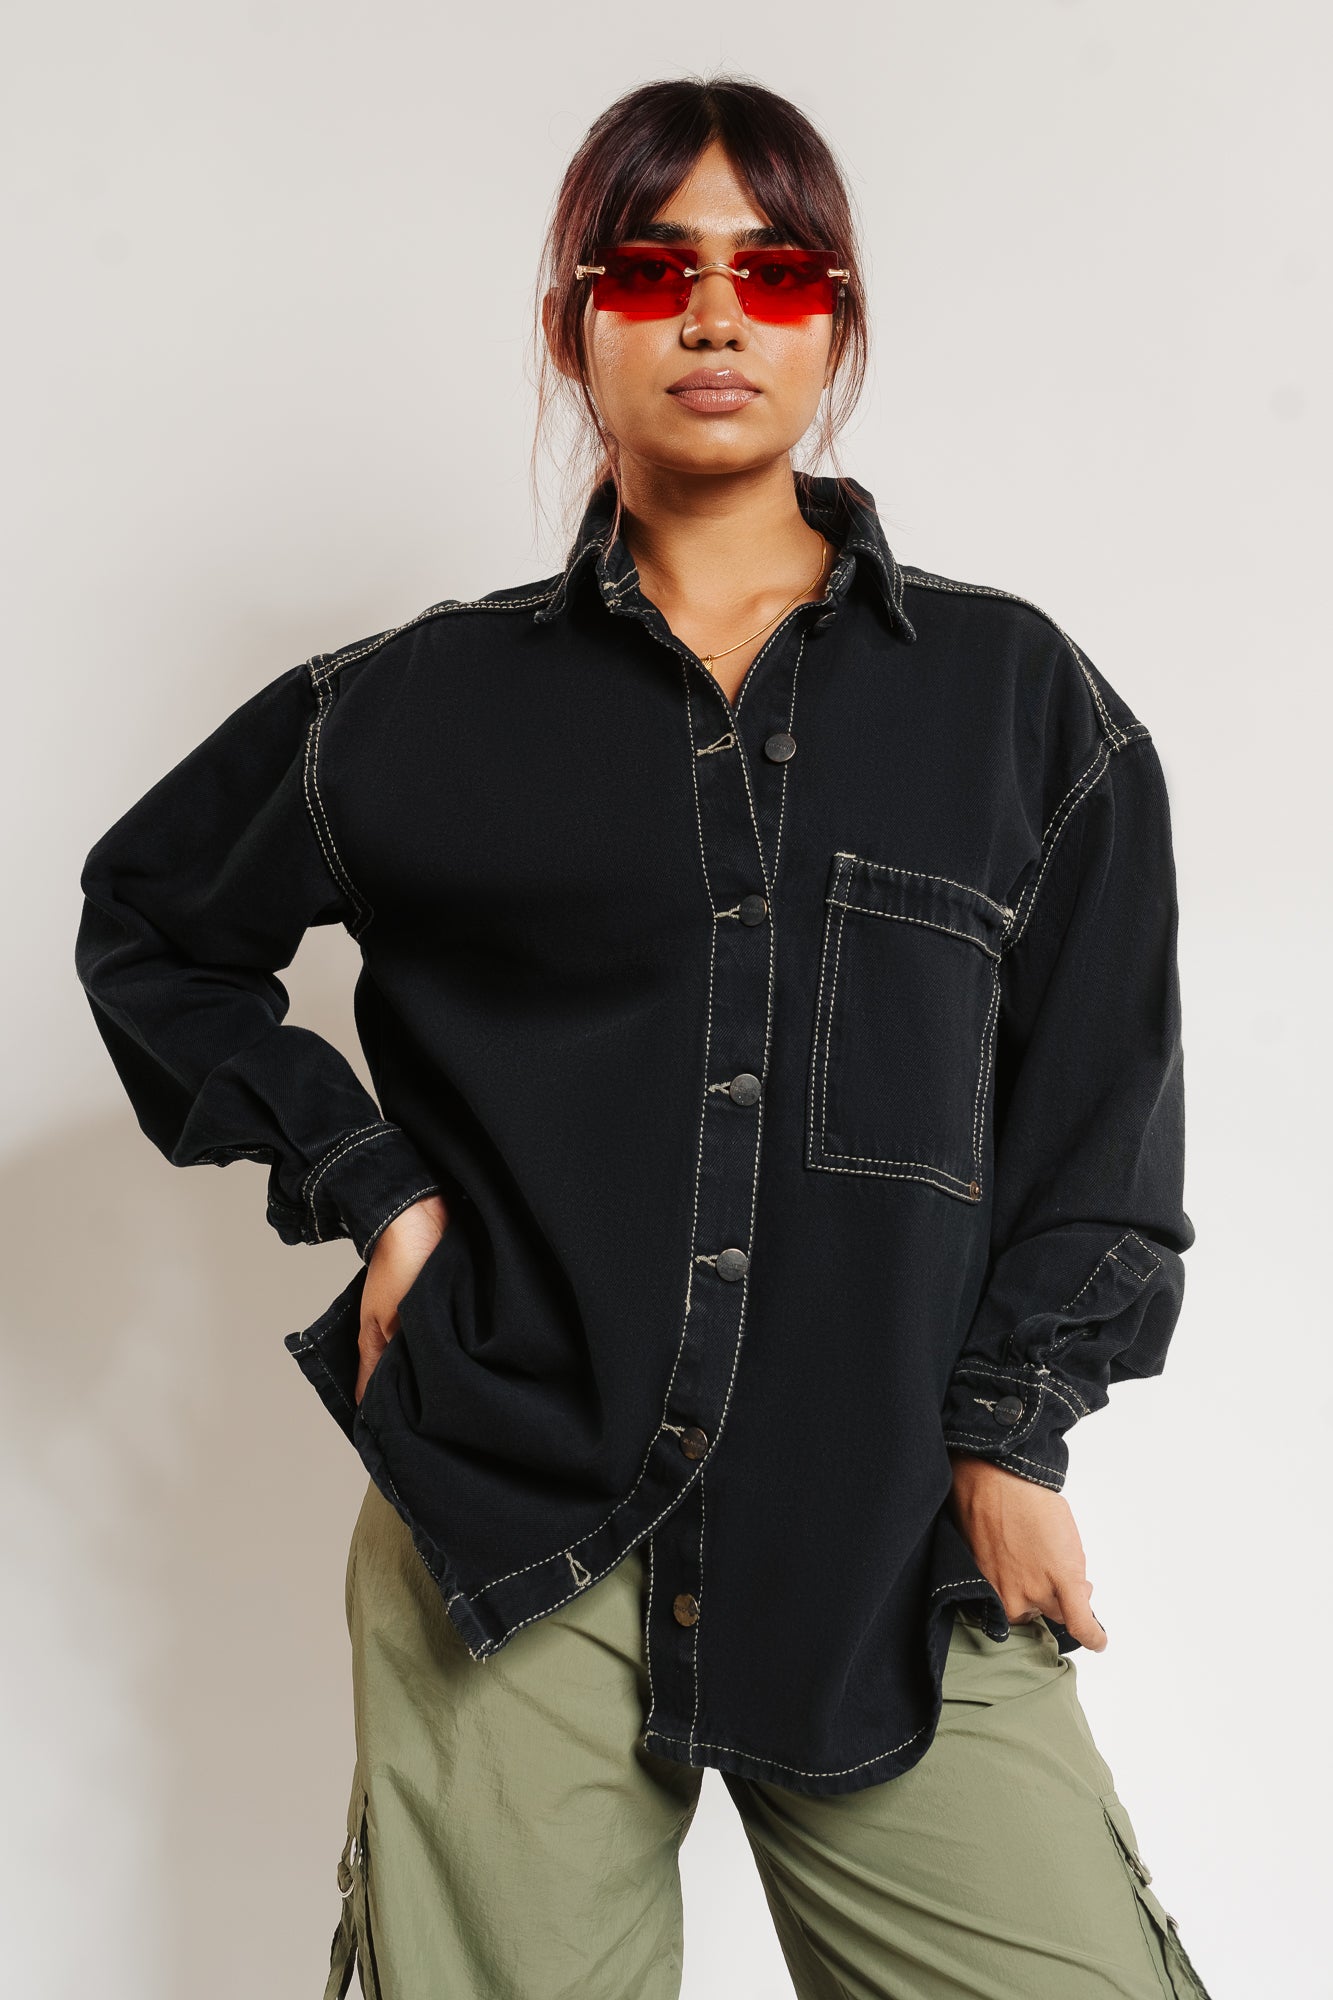 luvamia Denim Top Blouses & Button-Down Shirts Long Sleeve Shirt Black Shirt  Womens Work Black Jean Jacket Cowgirl Shirt Size Small Size 4 6 at Amazon  Women's Clothing store